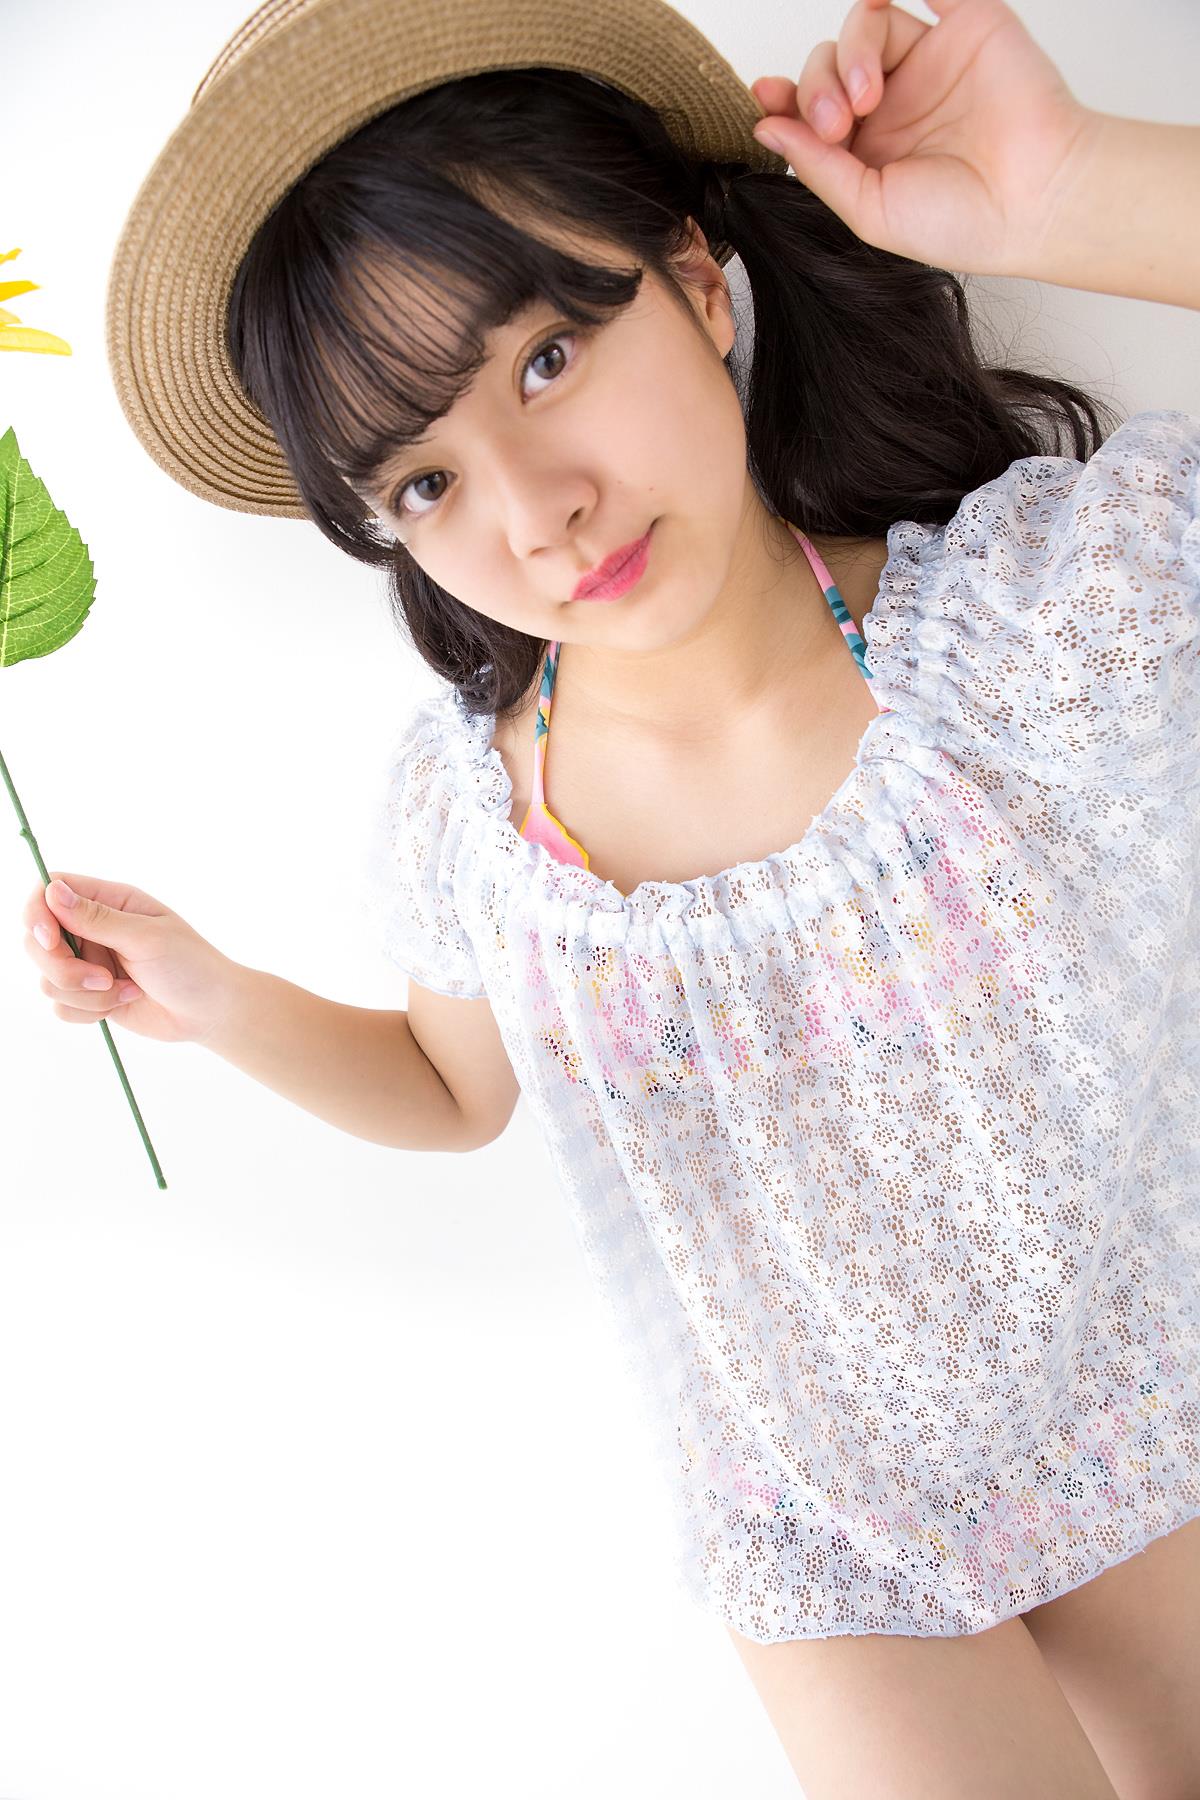 Minisuka.tv Saria Natsume 夏目咲莉愛 Premium Gallery 05 - 29.jpg